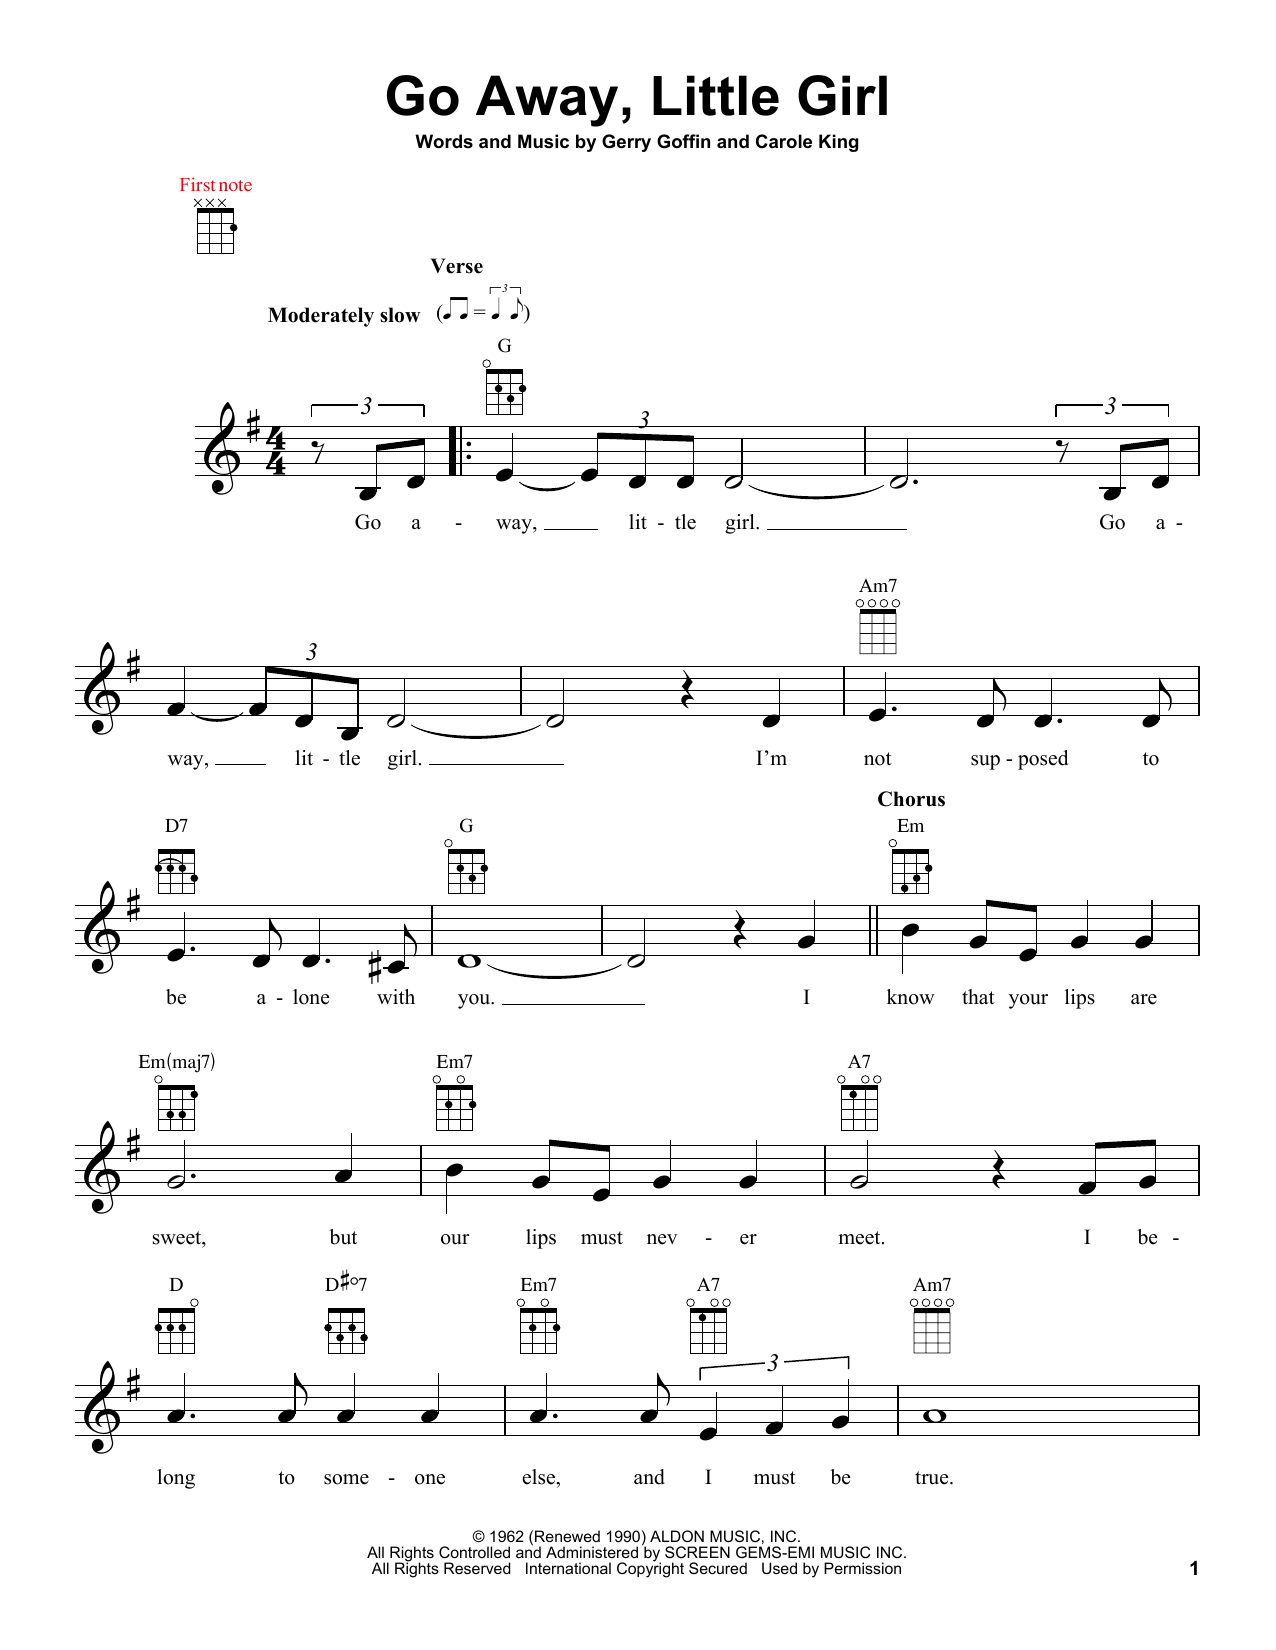 Donny Osmond Go Away, Little Girl Sheet Music Notes & Chords for Ukulele - Download or Print PDF